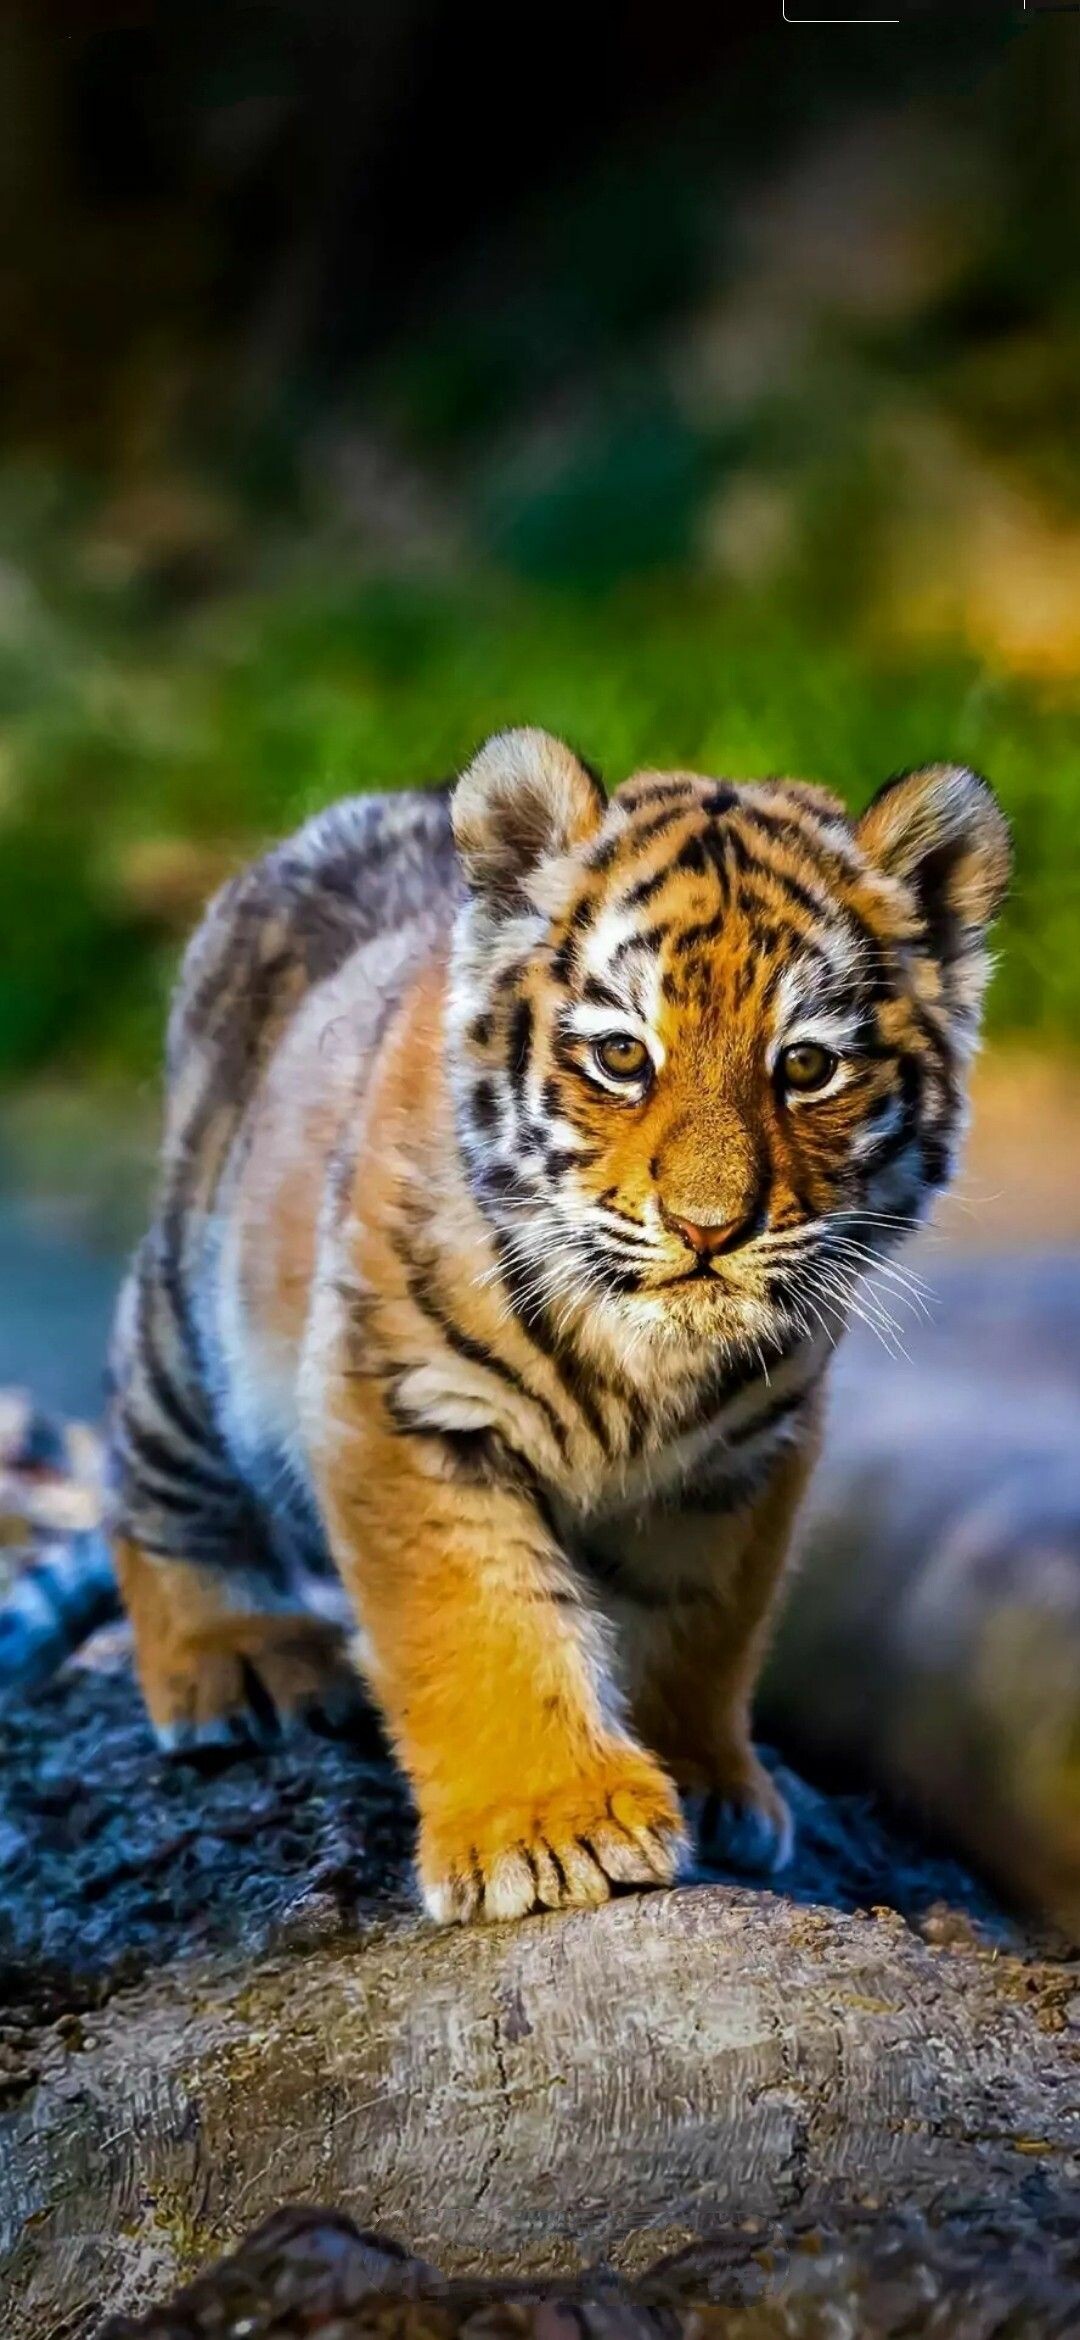 Tiger Cub: Wild cat with stripes, Big cats babies, Terrestrial animal. 1080x2340 HD Wallpaper.